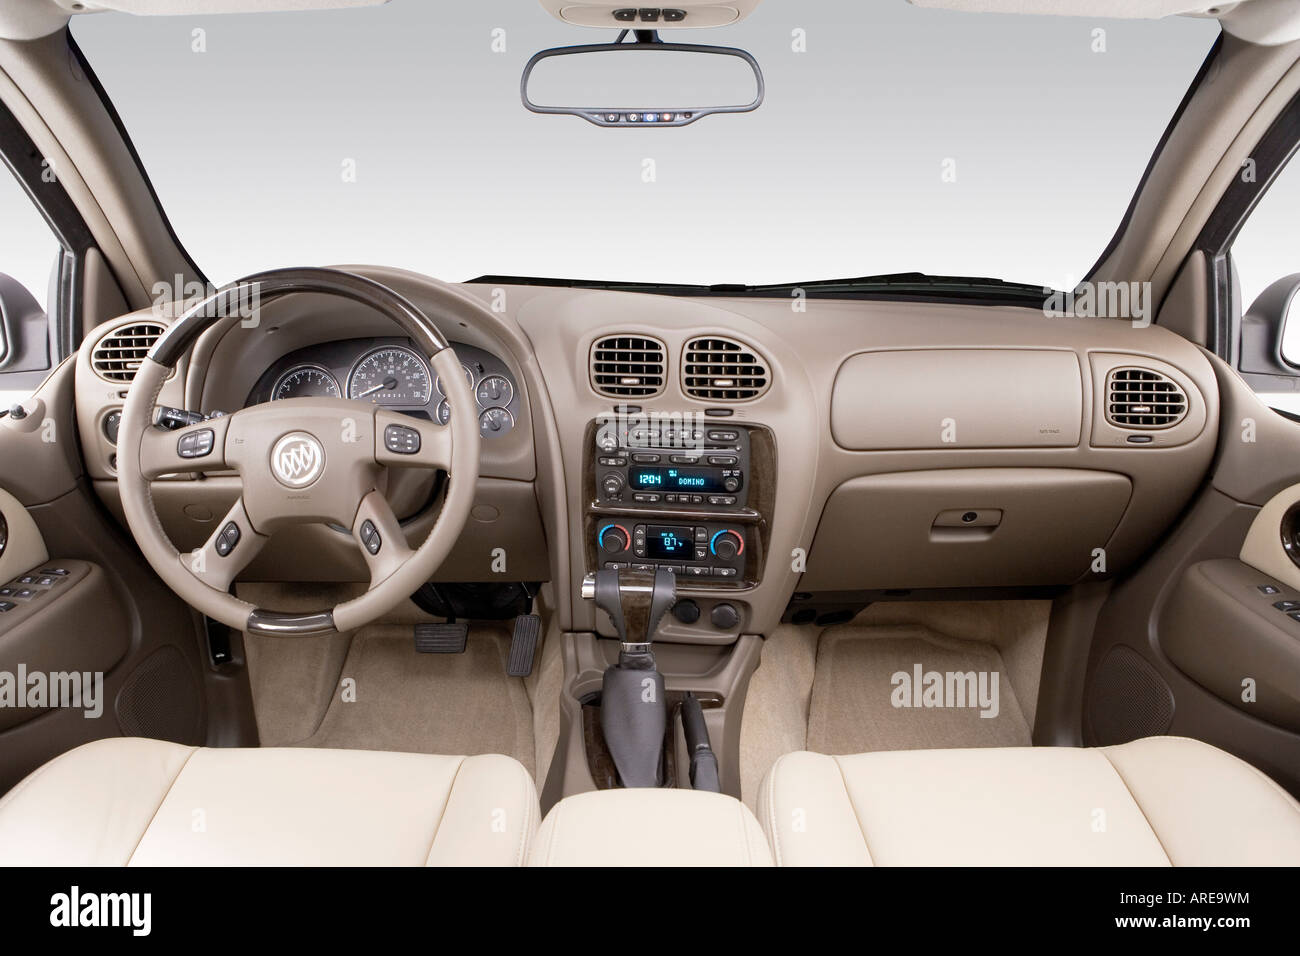 2006 Buick Rainier CXL in Gray - Dashboard, center console, gear shifter  view Stock Photo - Alamy